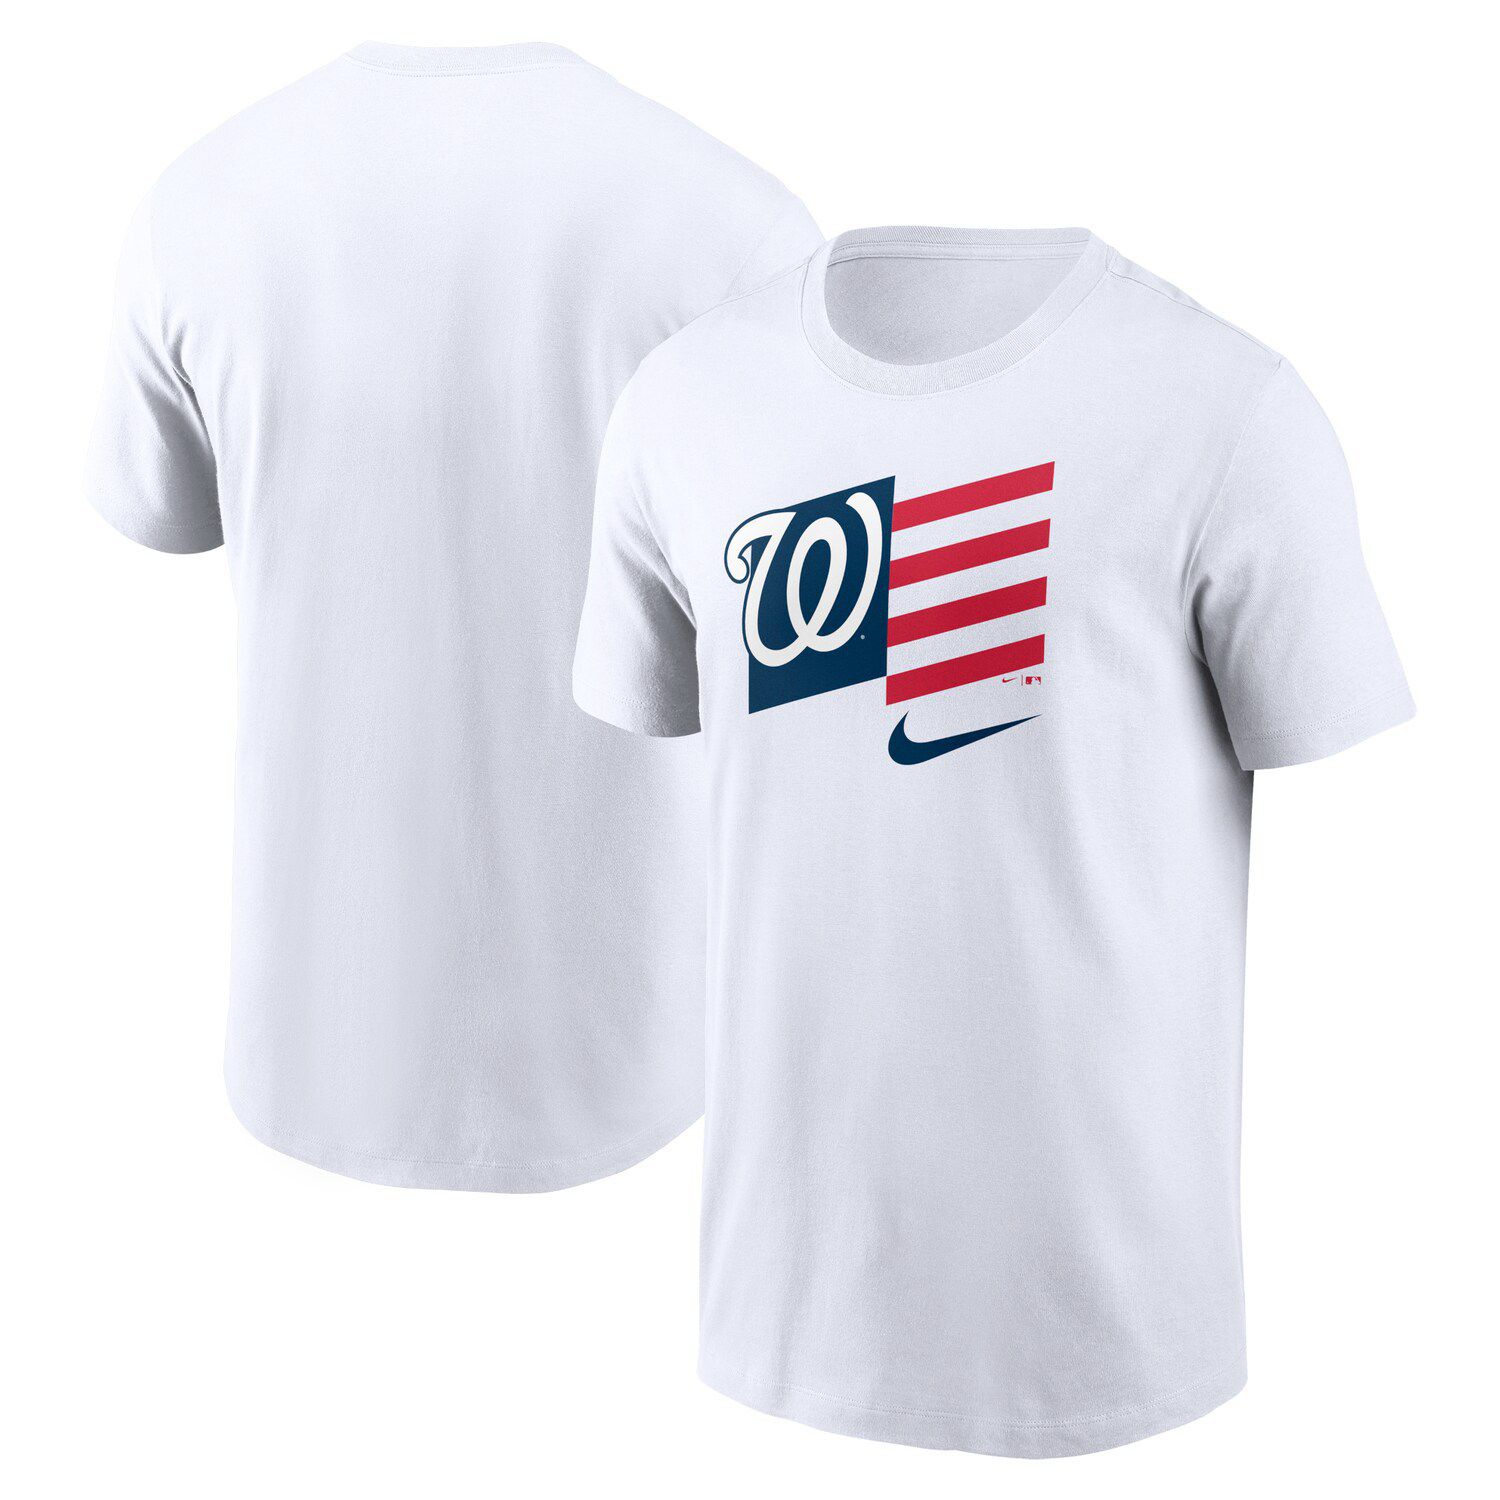 Men's Nike Navy Oakland Athletics Team Americana T-Shirt